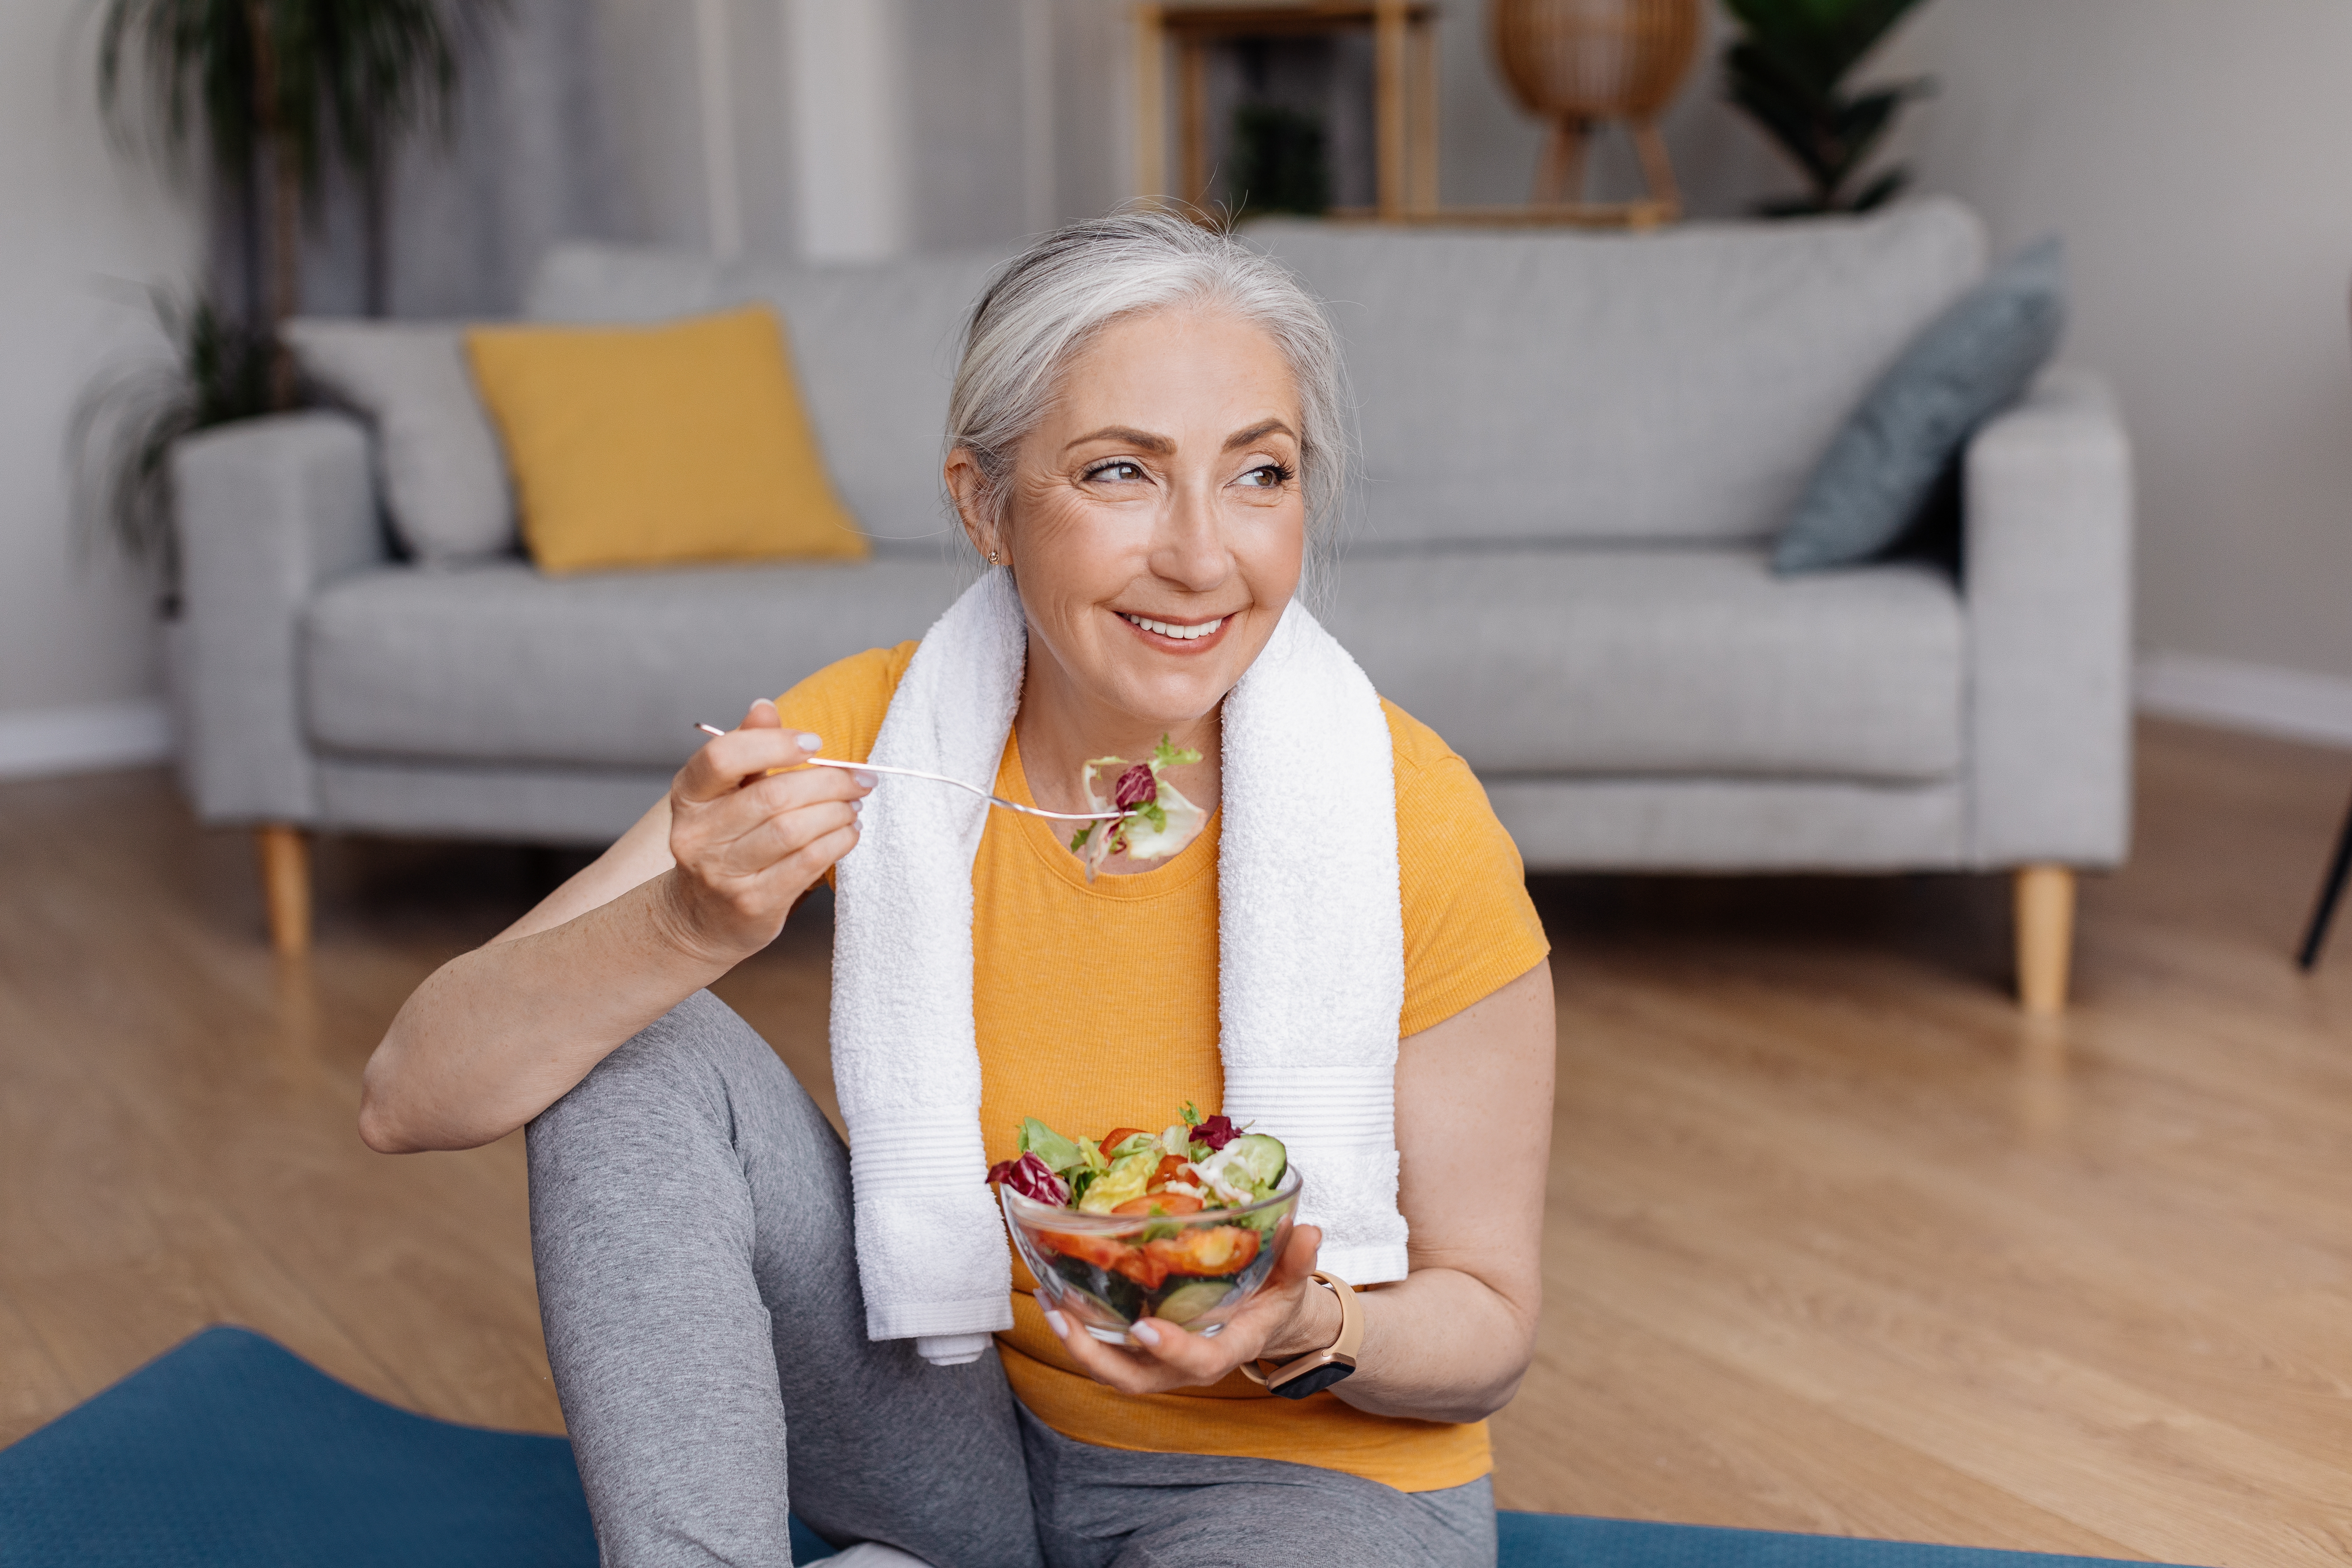 A happy senior woman eating fresh vegetable salad | Source: Shutterstock